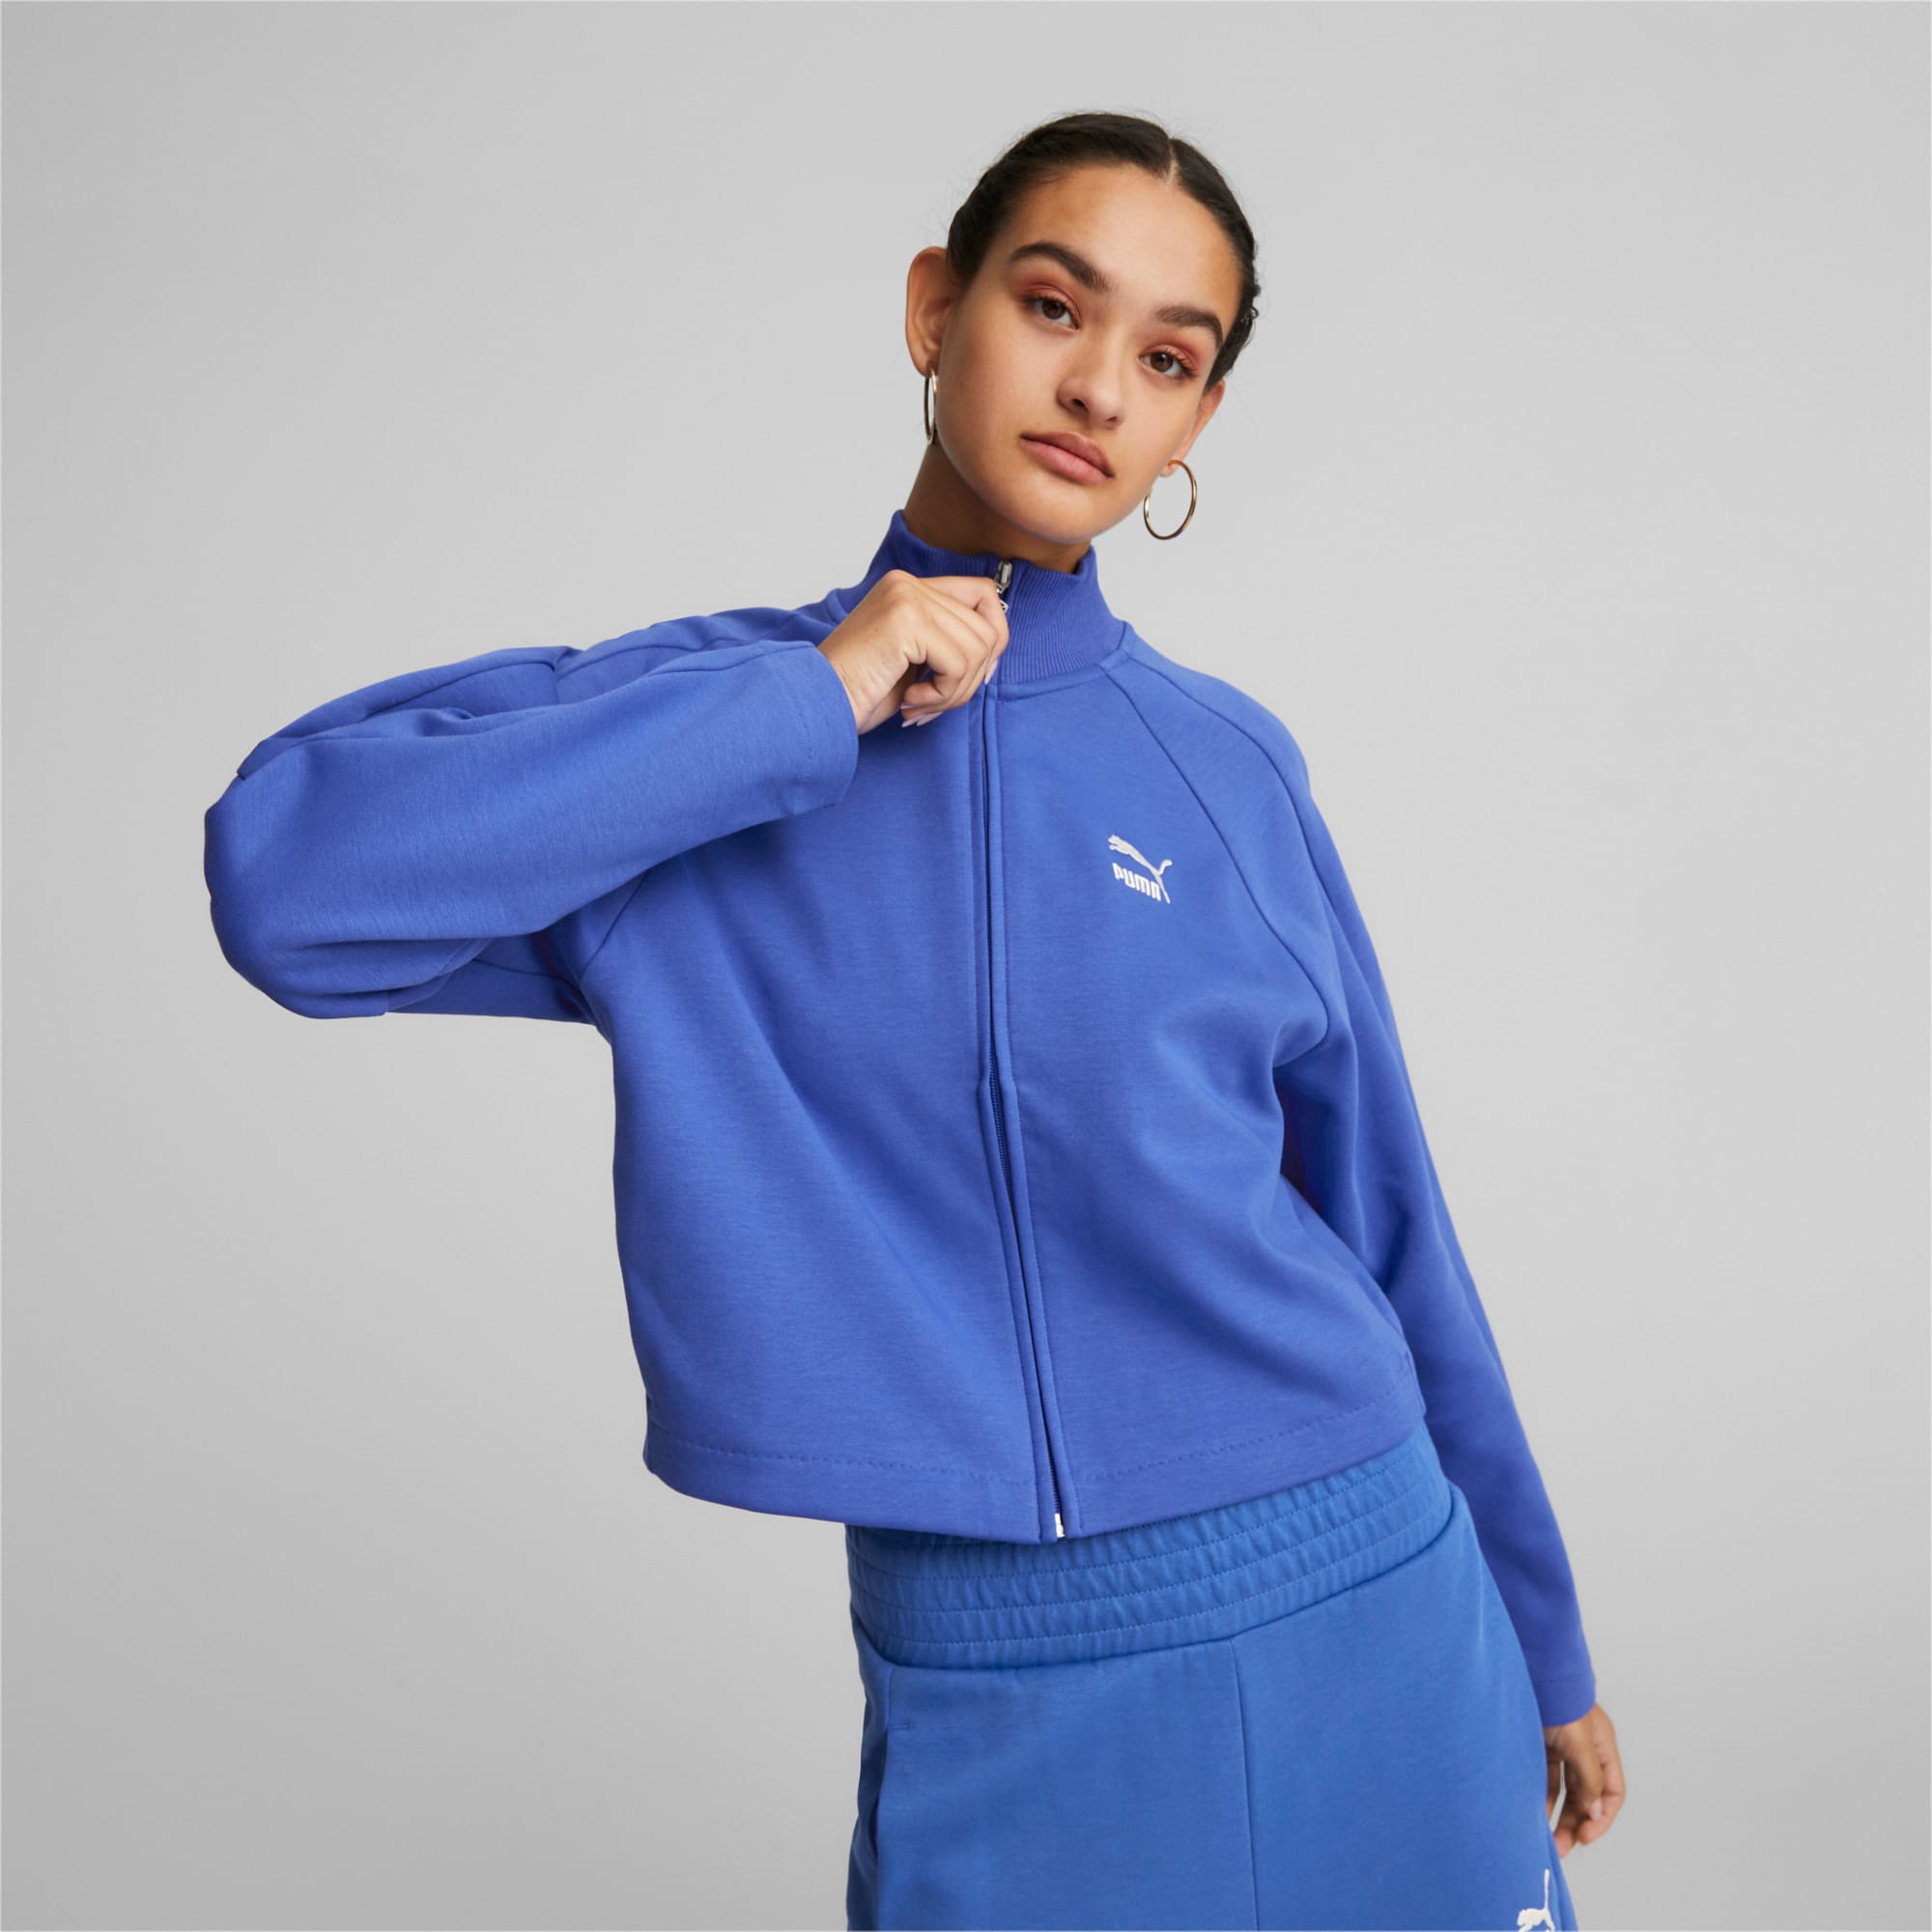 PUMA T7 Track Jacket Women, Royal Blue, Size L, Clothing